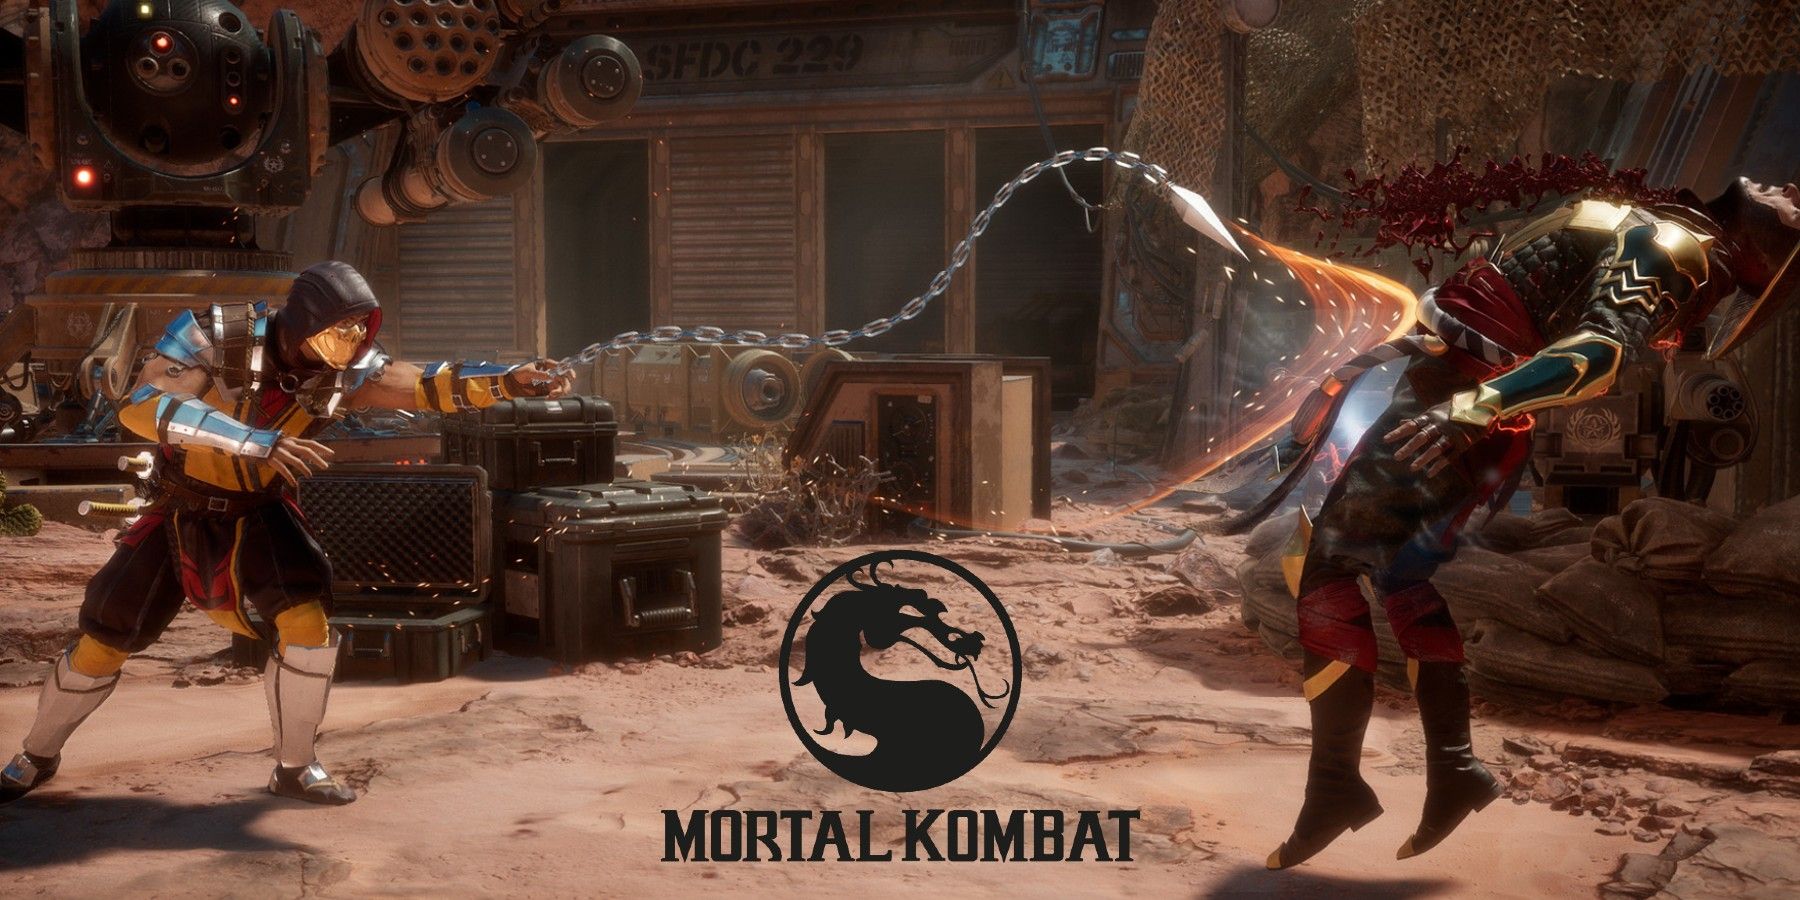 Mortal Kombat Adventure: 12/14/11